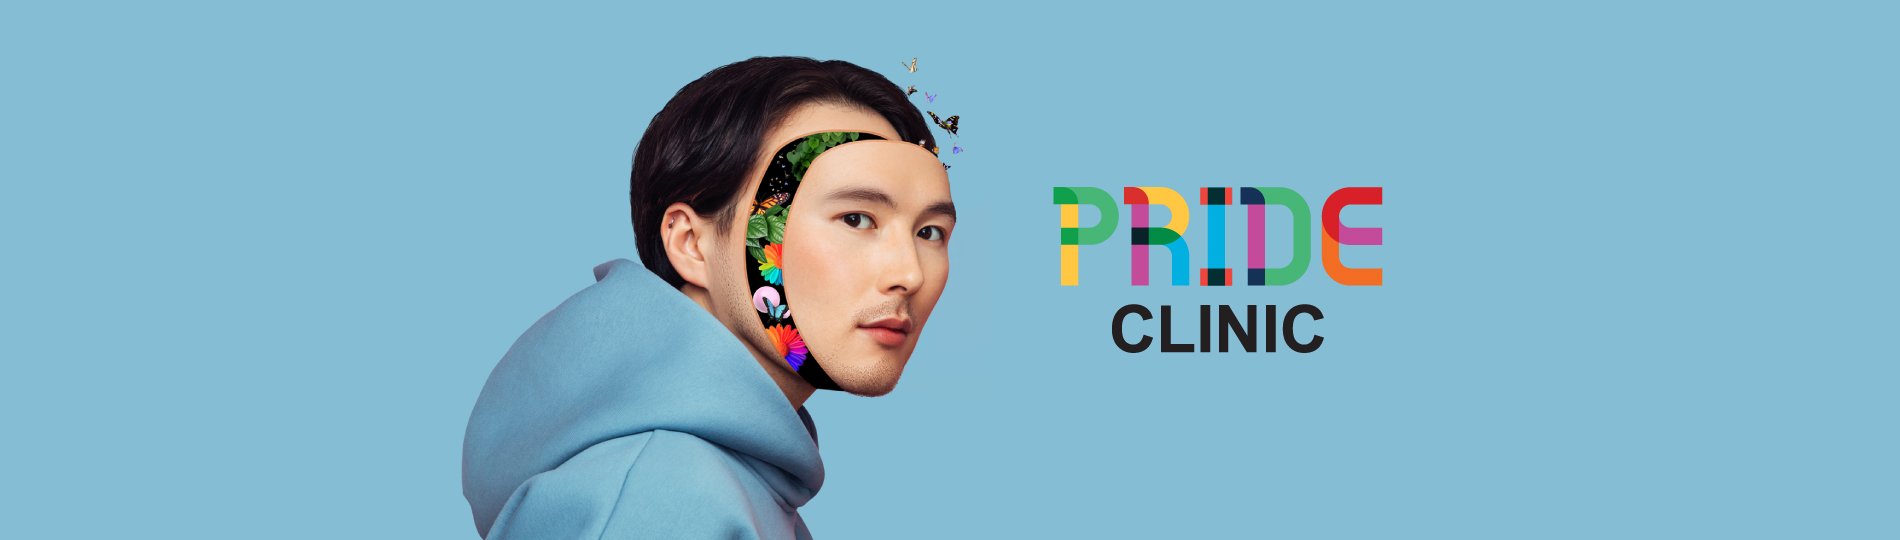 Pride-Clinic_Hero-banner-2_Desktop_AW4.jpg